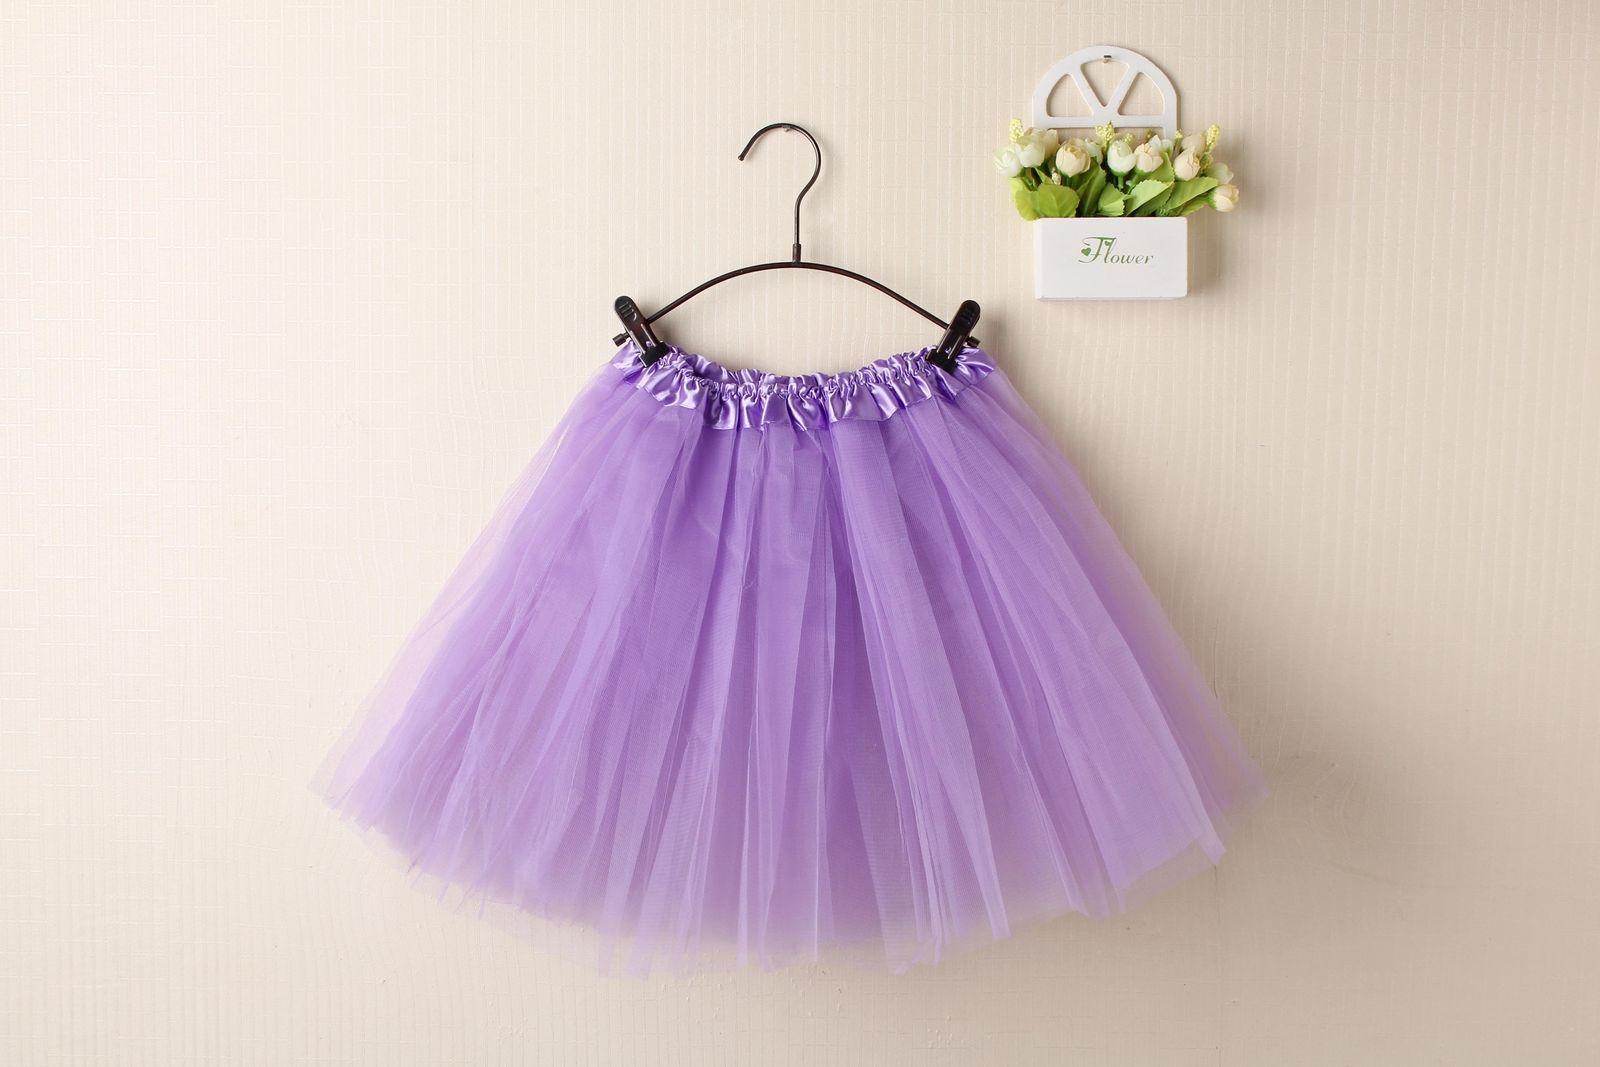 New Adults Tulle Tutu Skirt Dressup Party Costume Ballet Womens Girls Dance Wear - Light Purple (Size: Kids)